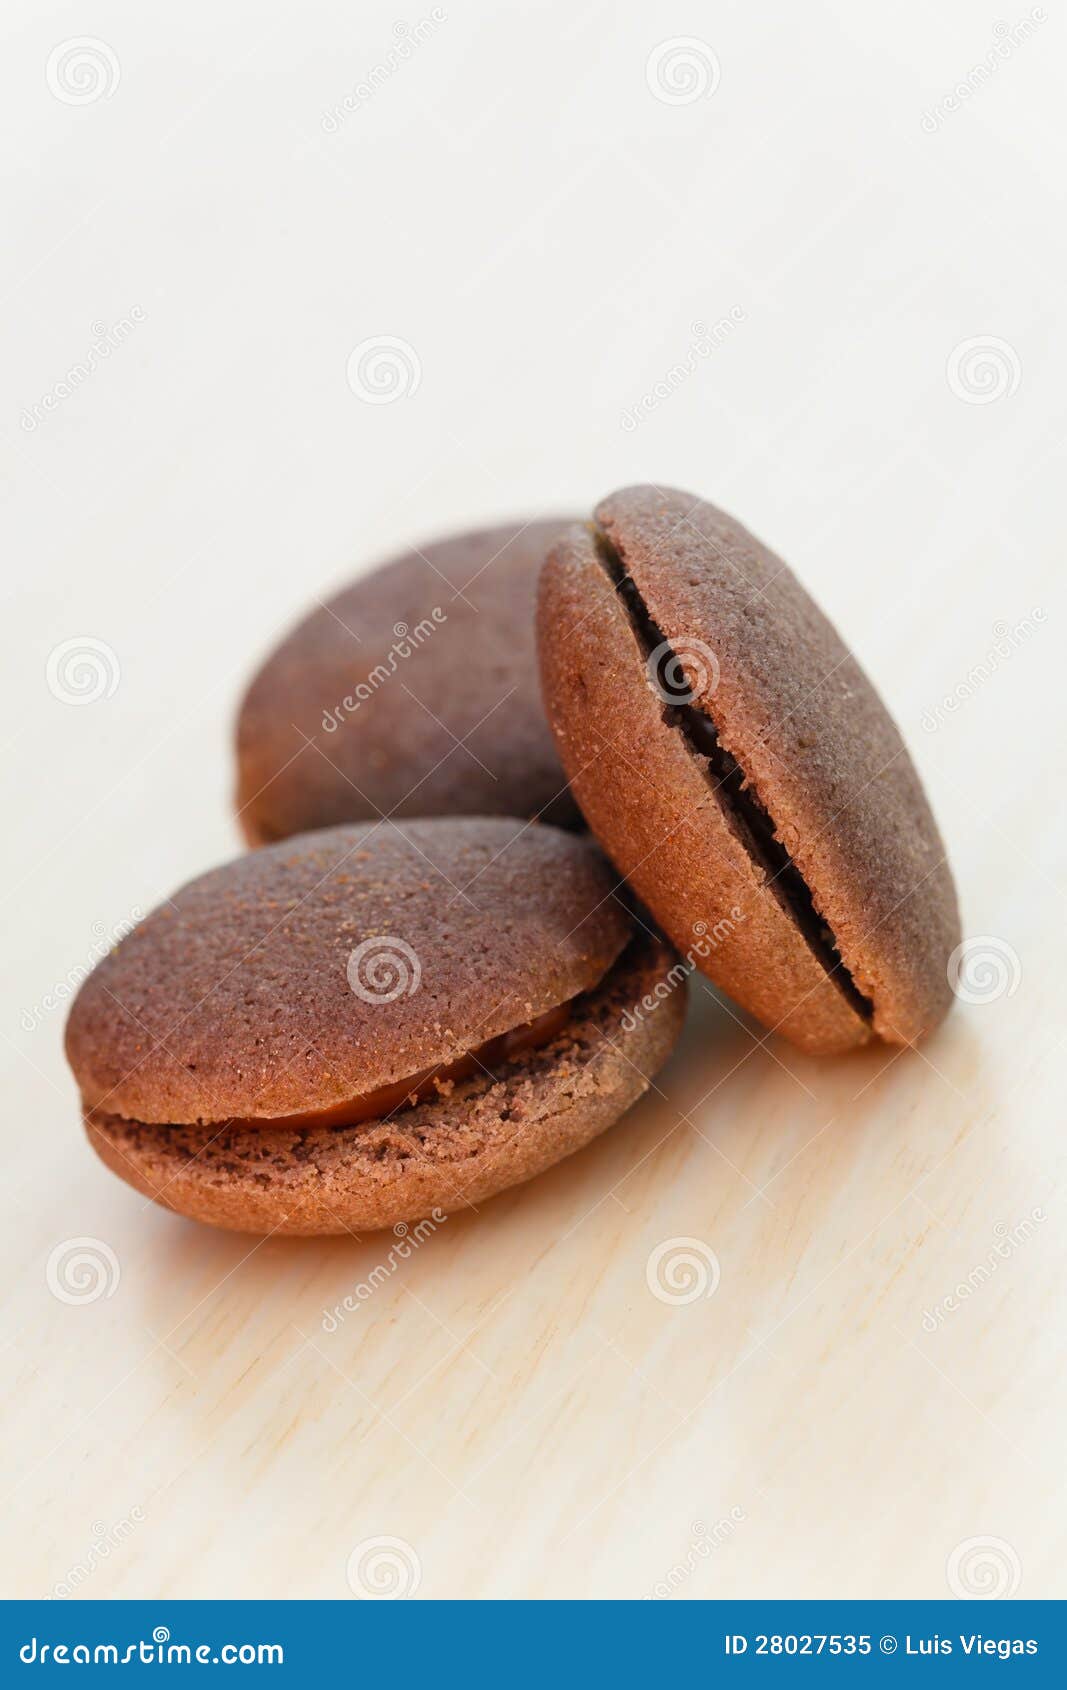 chocolate marron cookies